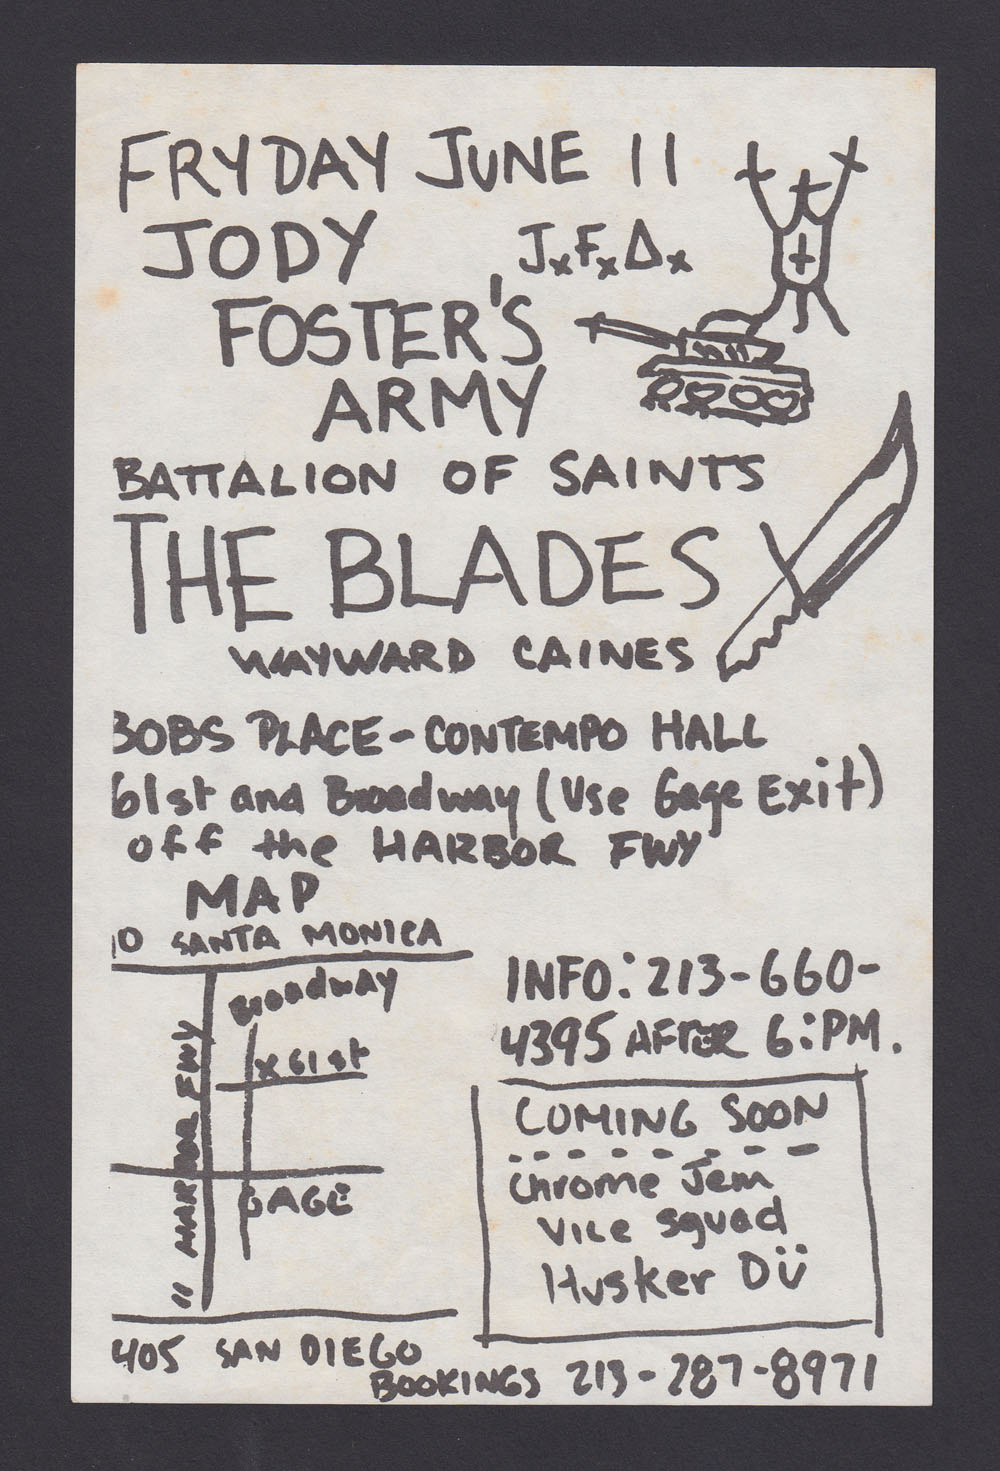 JFA w/ Battalion of Saints, Blades, Wayward Caines at Bob's Place